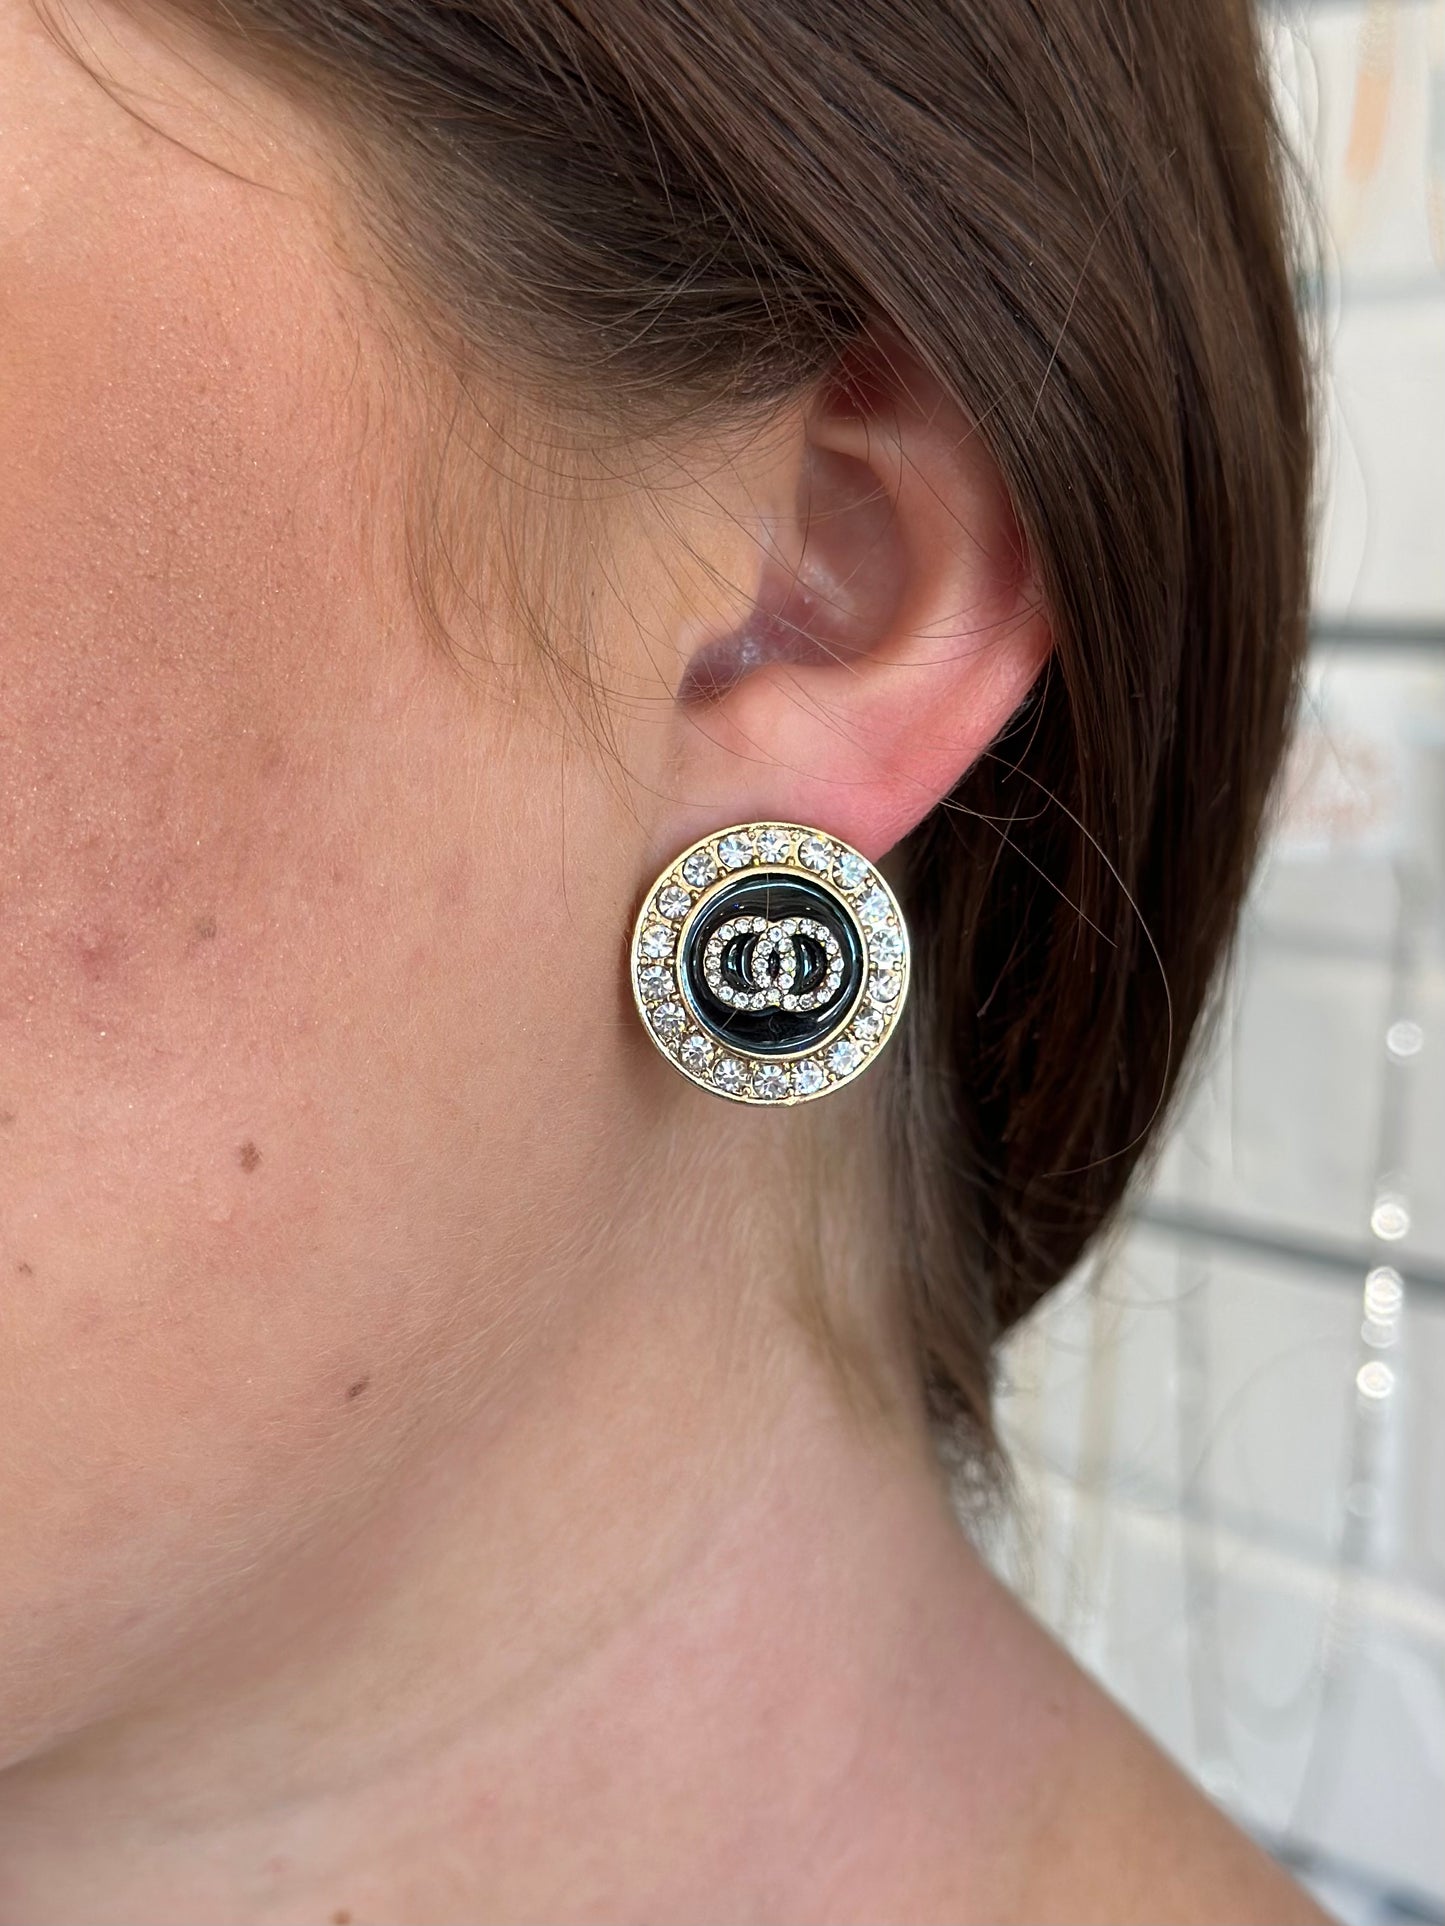 Load image into Gallery viewer, Crystal Circle Stud Earrings
